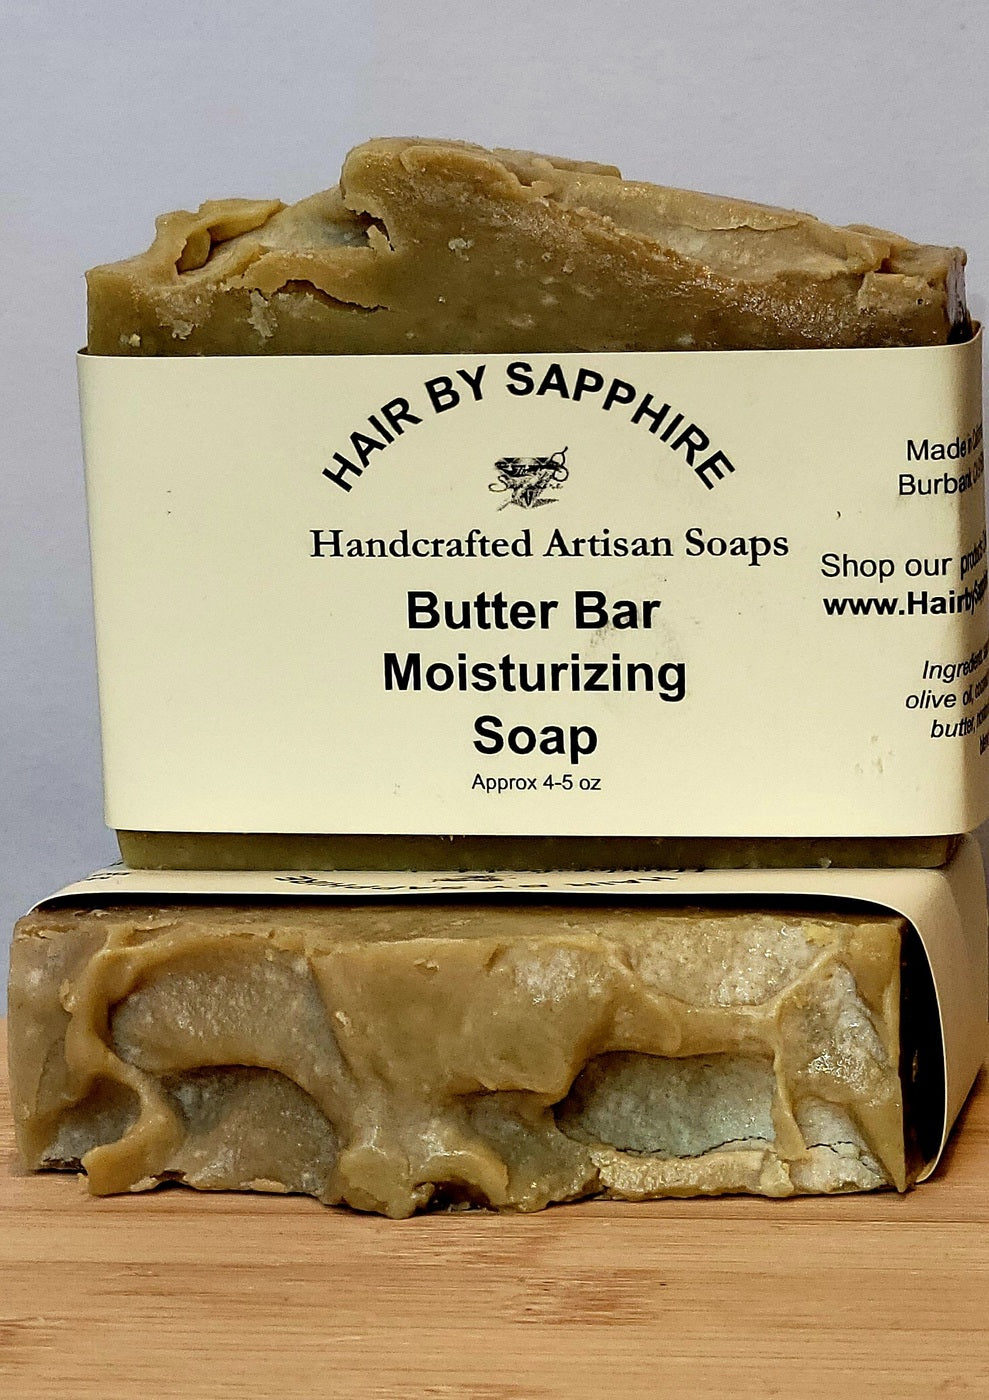 Butter Bar Moisturizing Soap